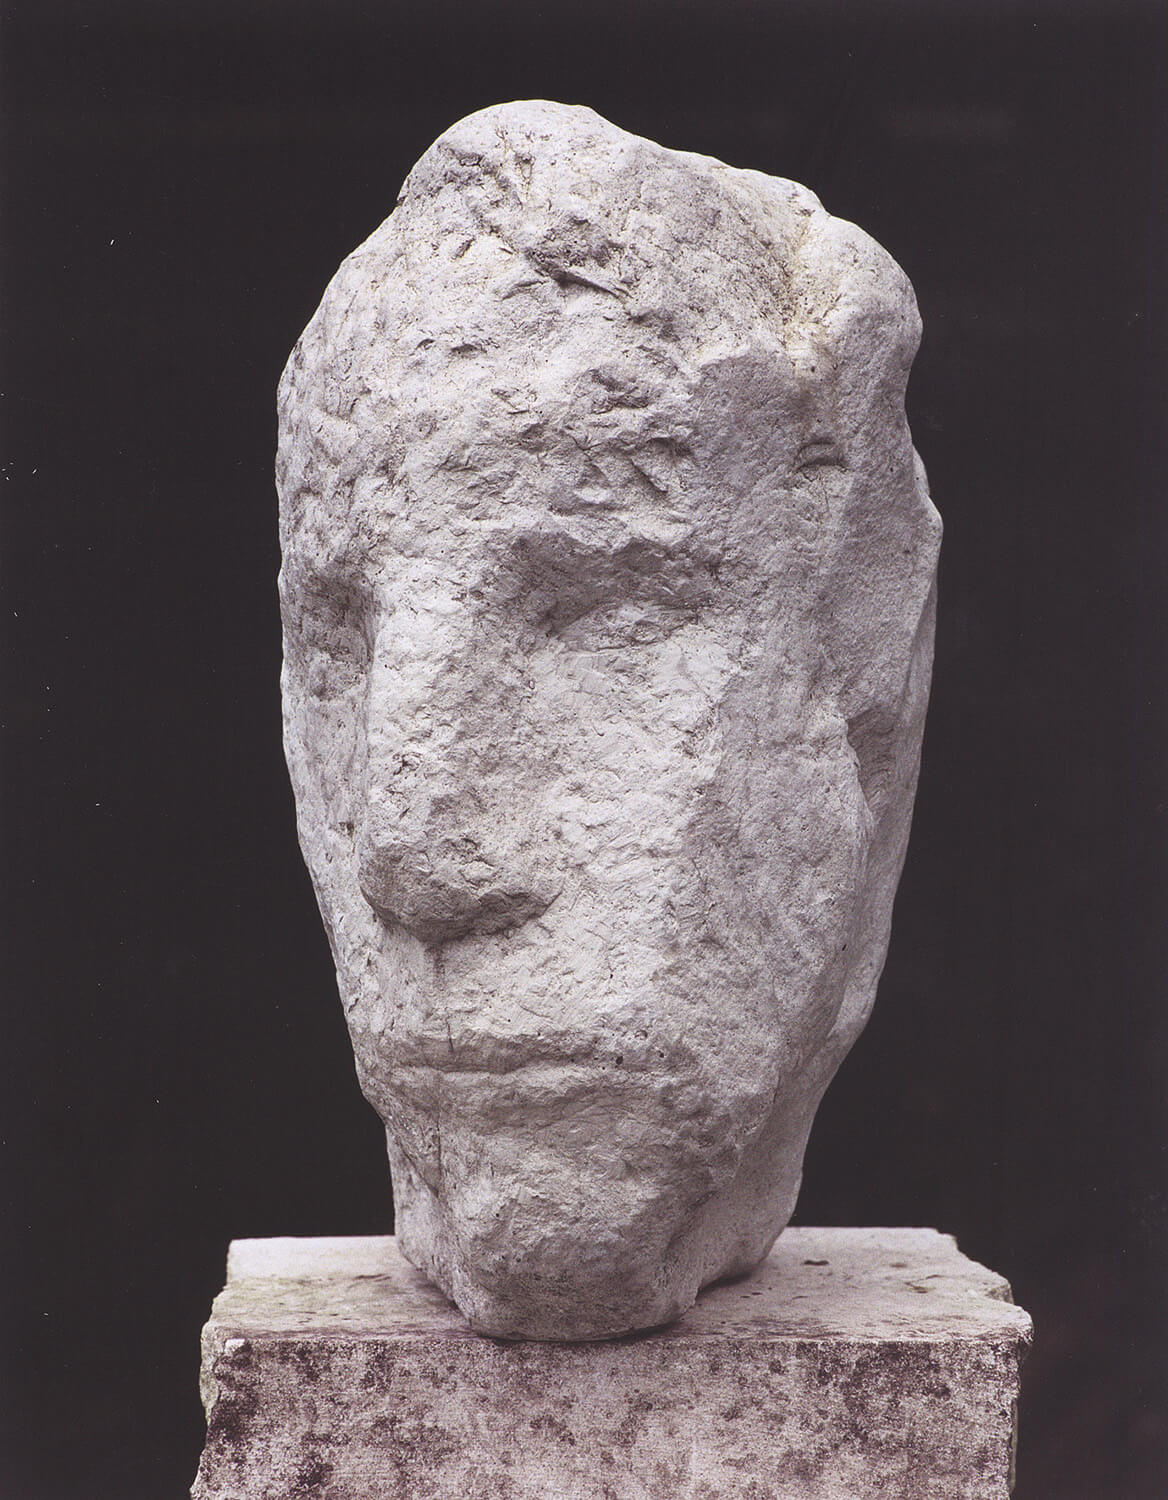 Emerita Pansowová, Portrait from Colle Verde, 1994, Carrara marble, height 32 cm